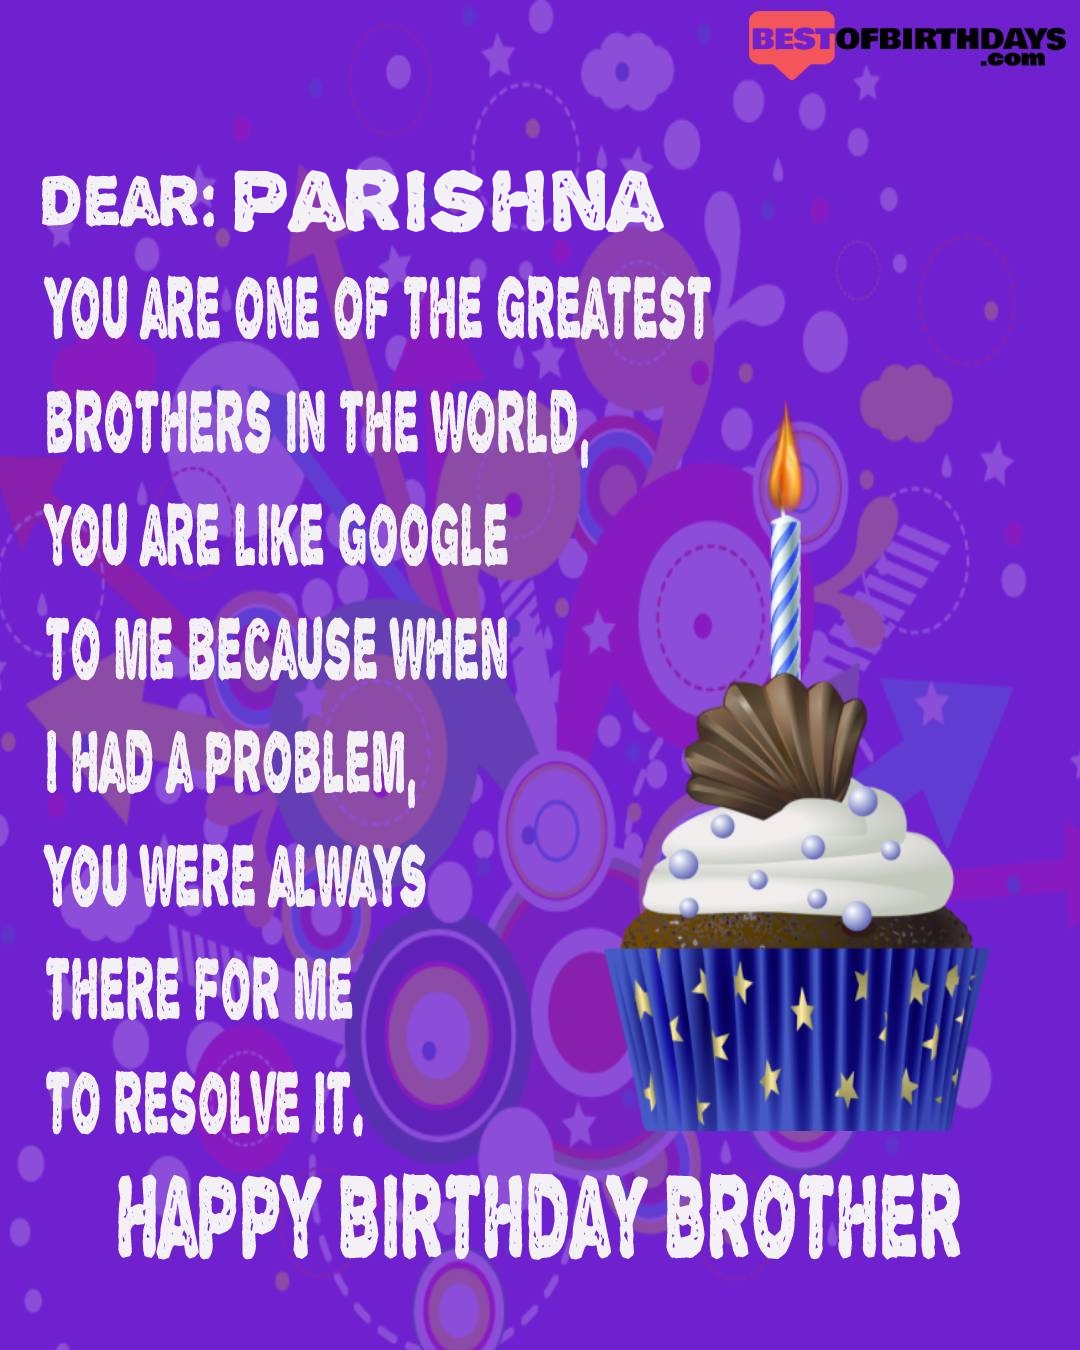 Happy birthday parishna bhai brother bro